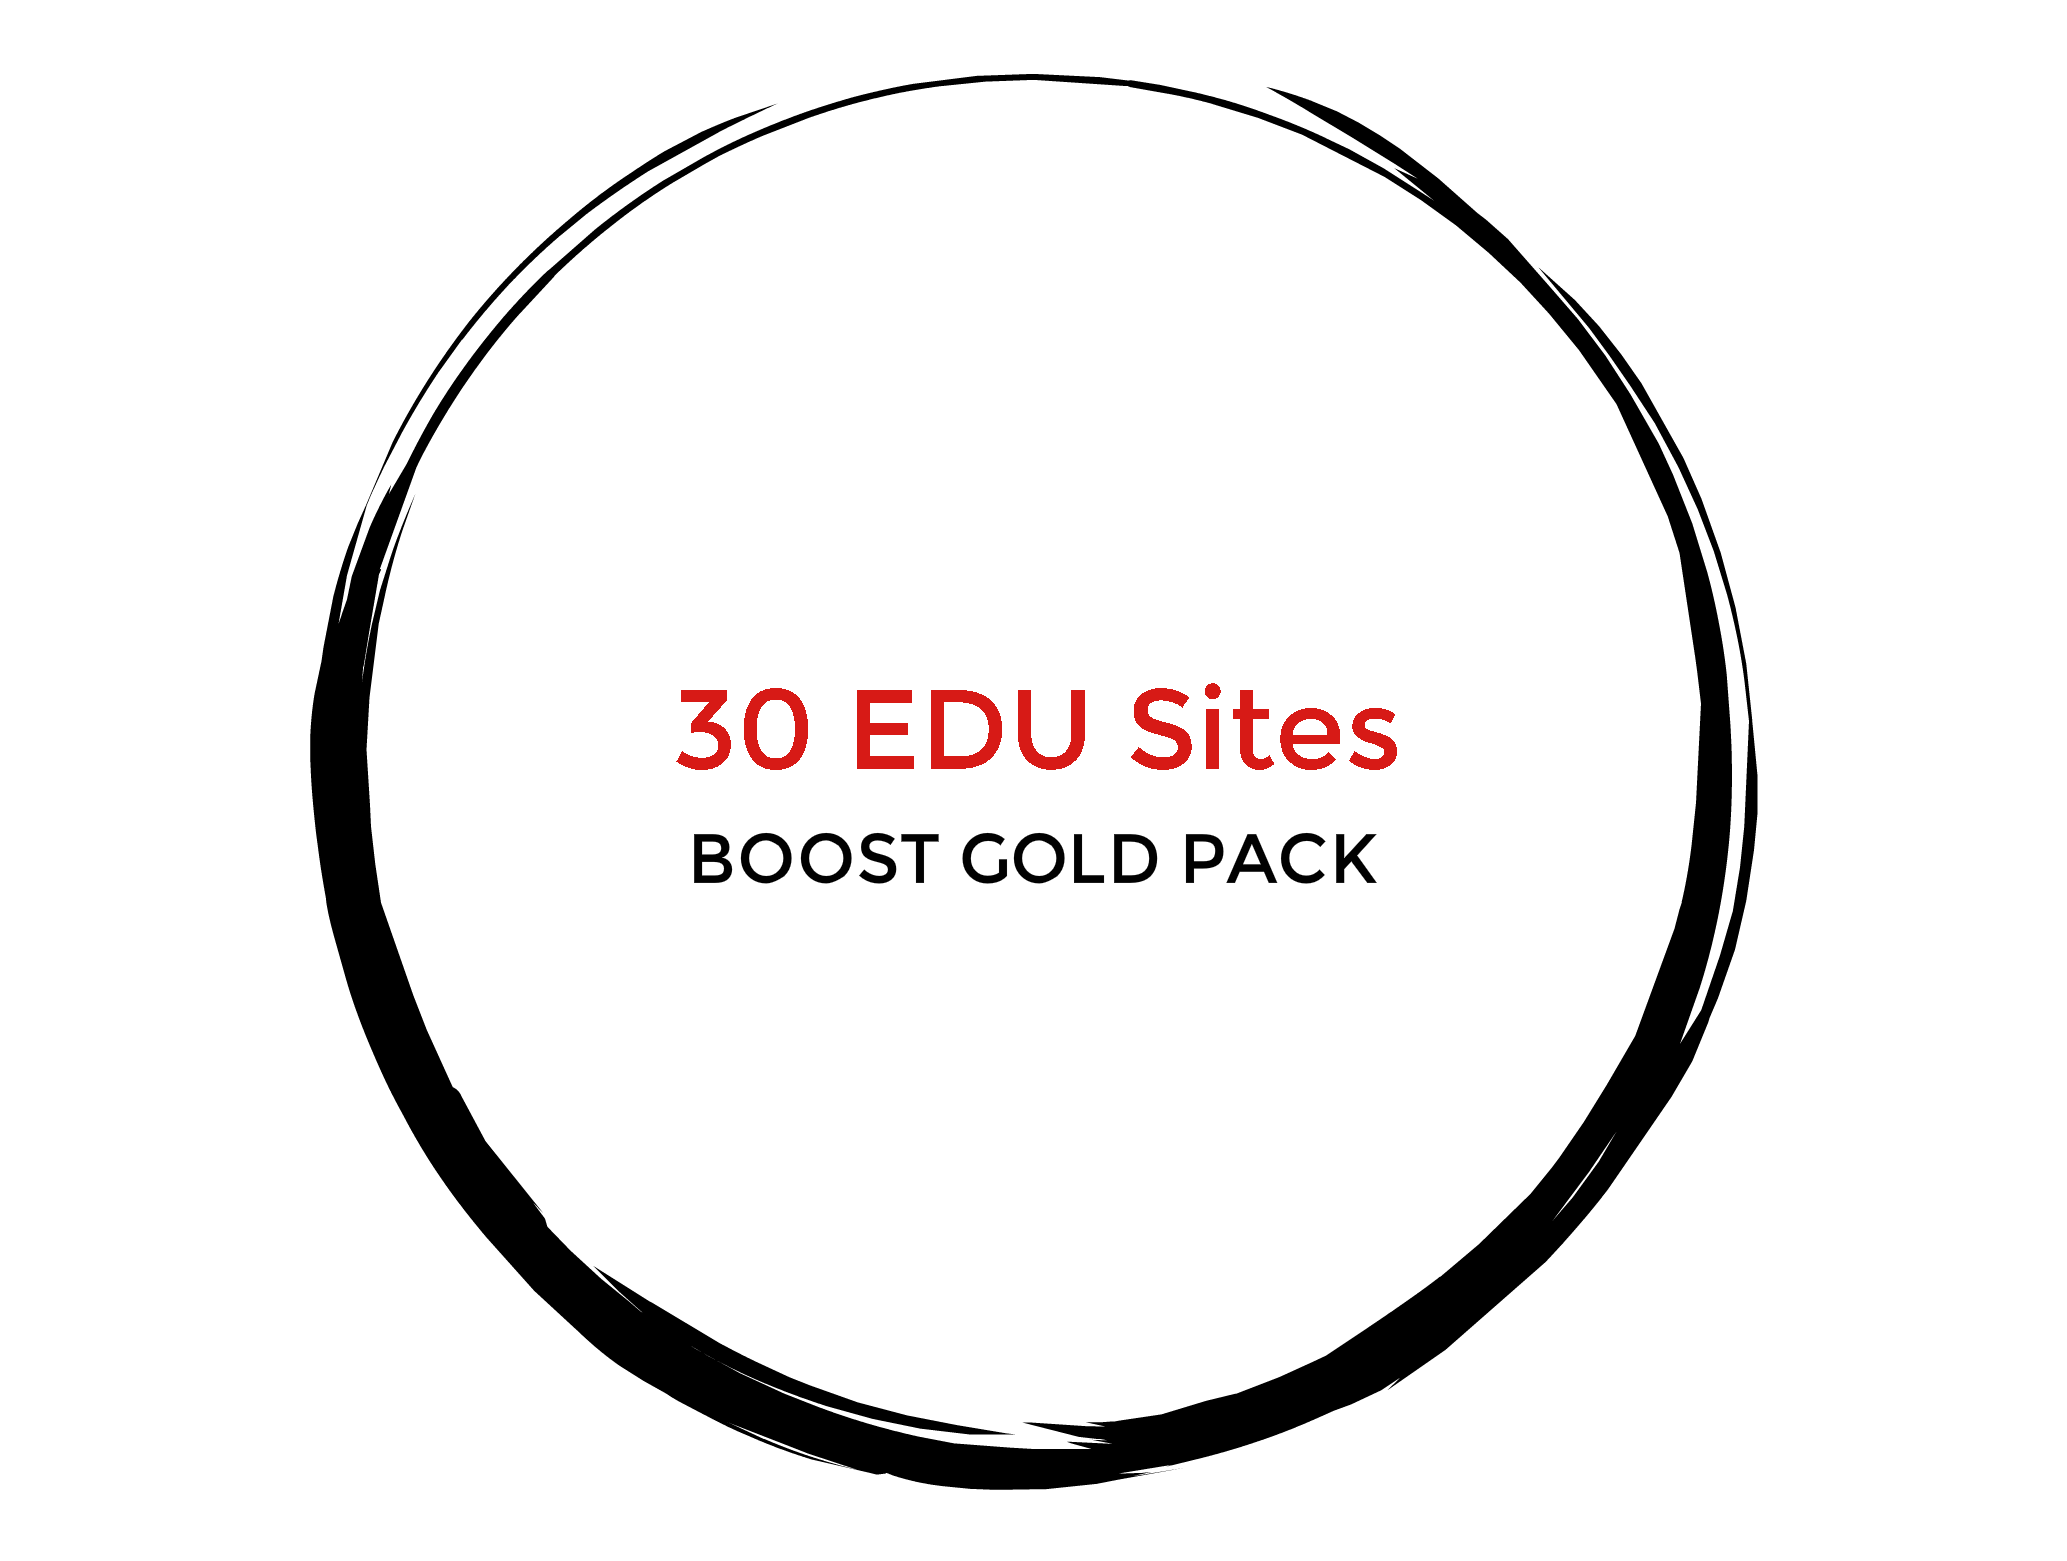 30 EDU Sites - Boost Gold Pack